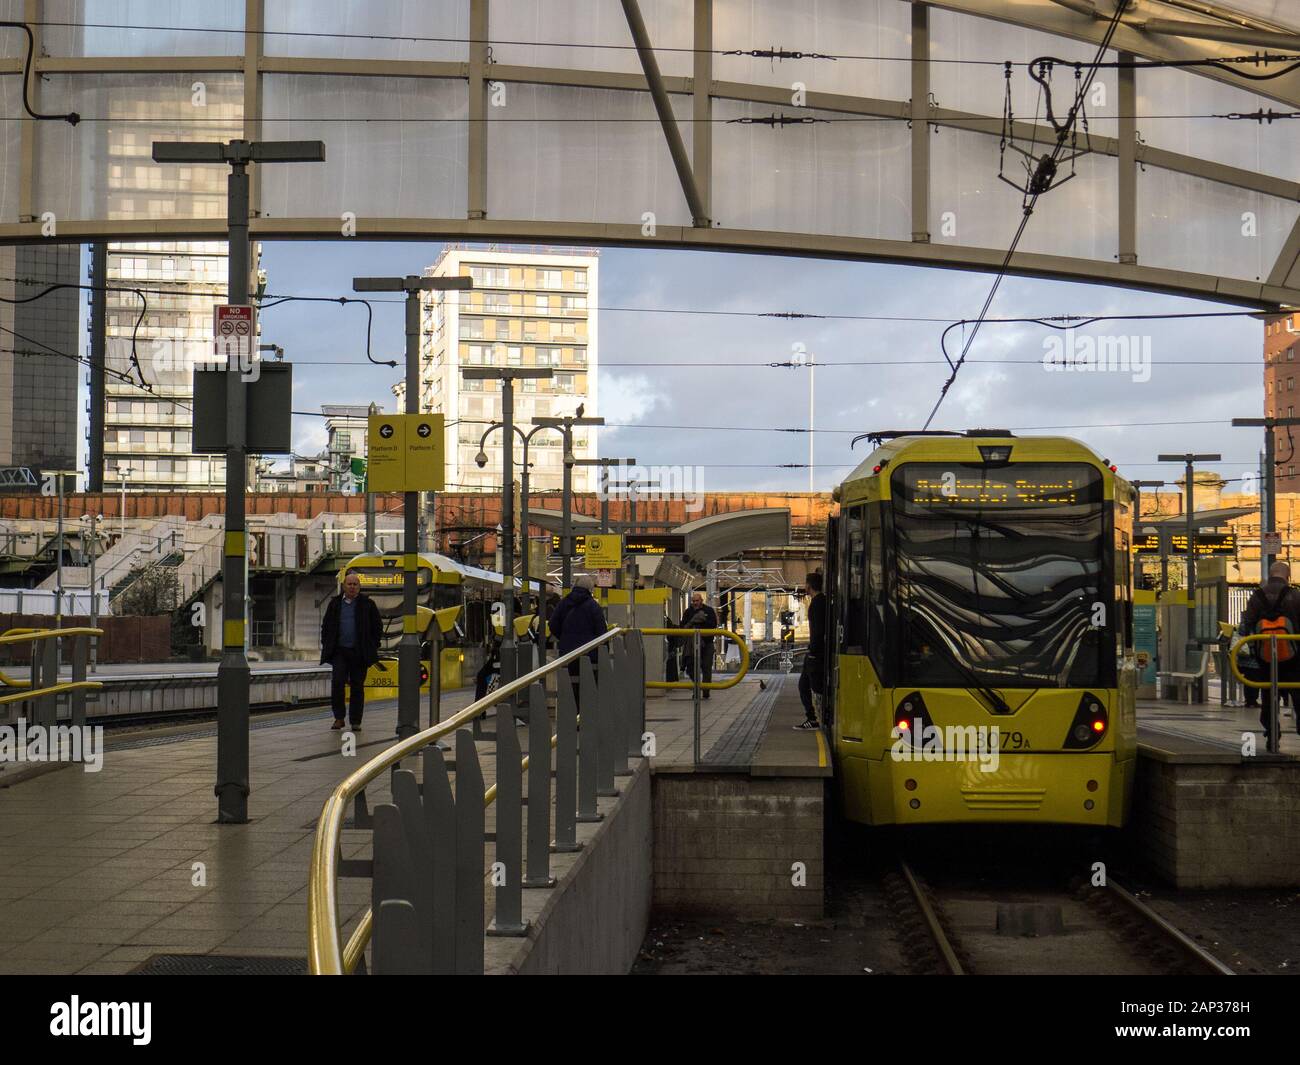 Metrolink tram at Victoria Station, Manchester Stock Photo